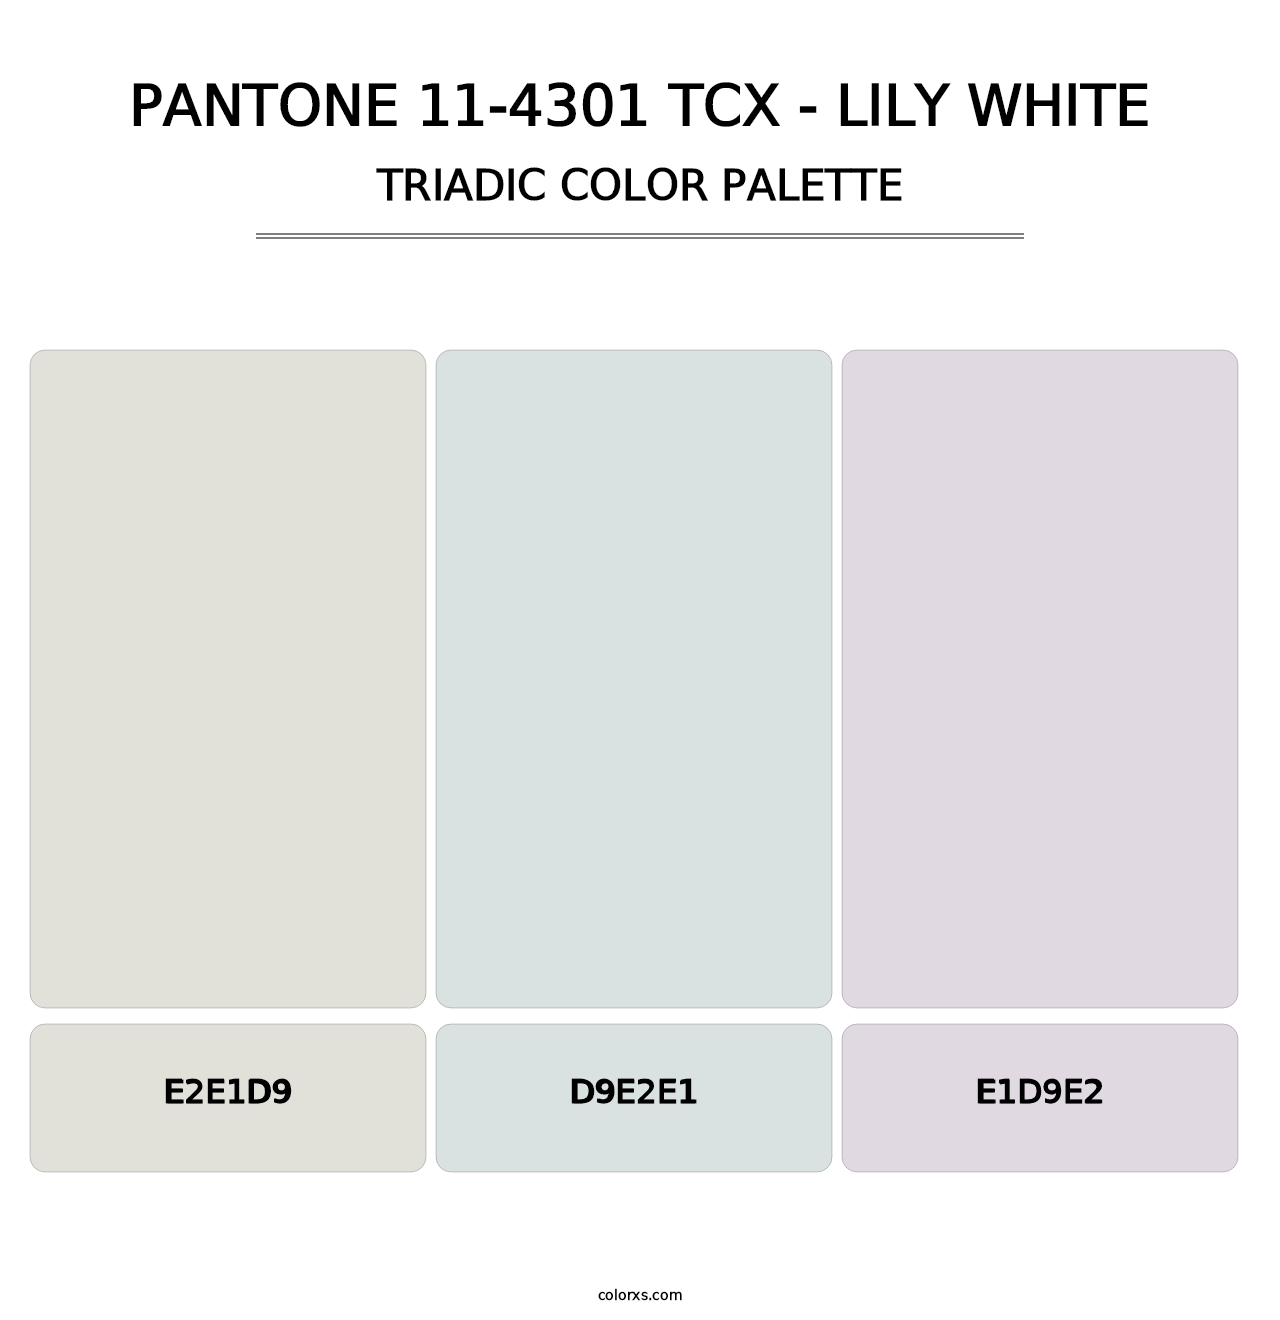 PANTONE 11-4301 TCX - Lily White - Triadic Color Palette